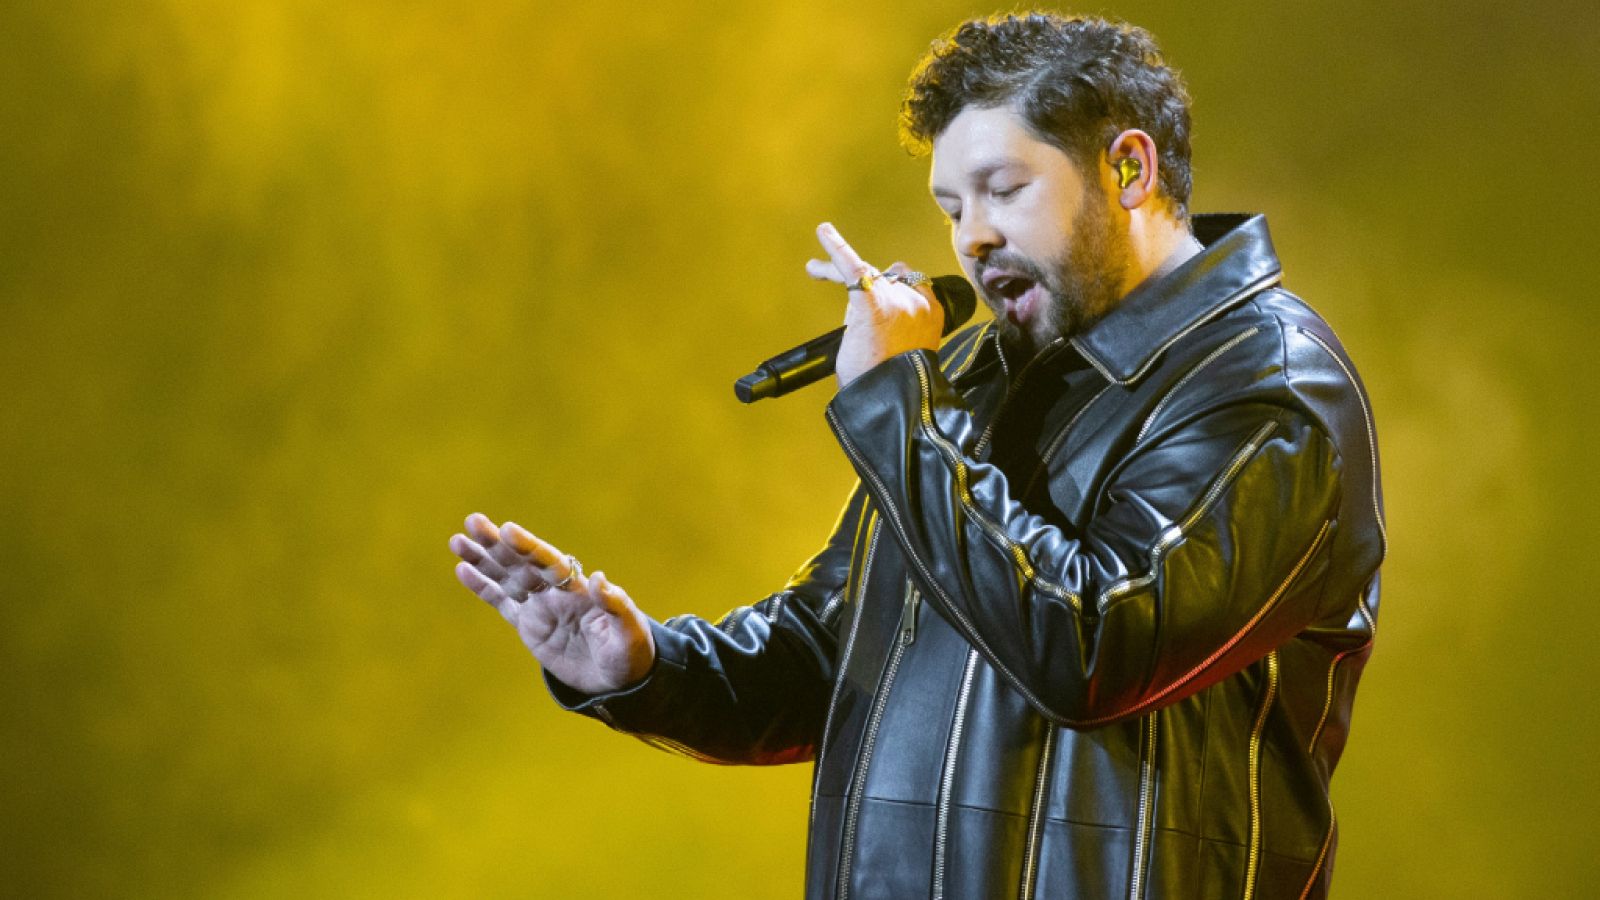 Eurovisión 2021: Reino Unido canta "Embers" en la final